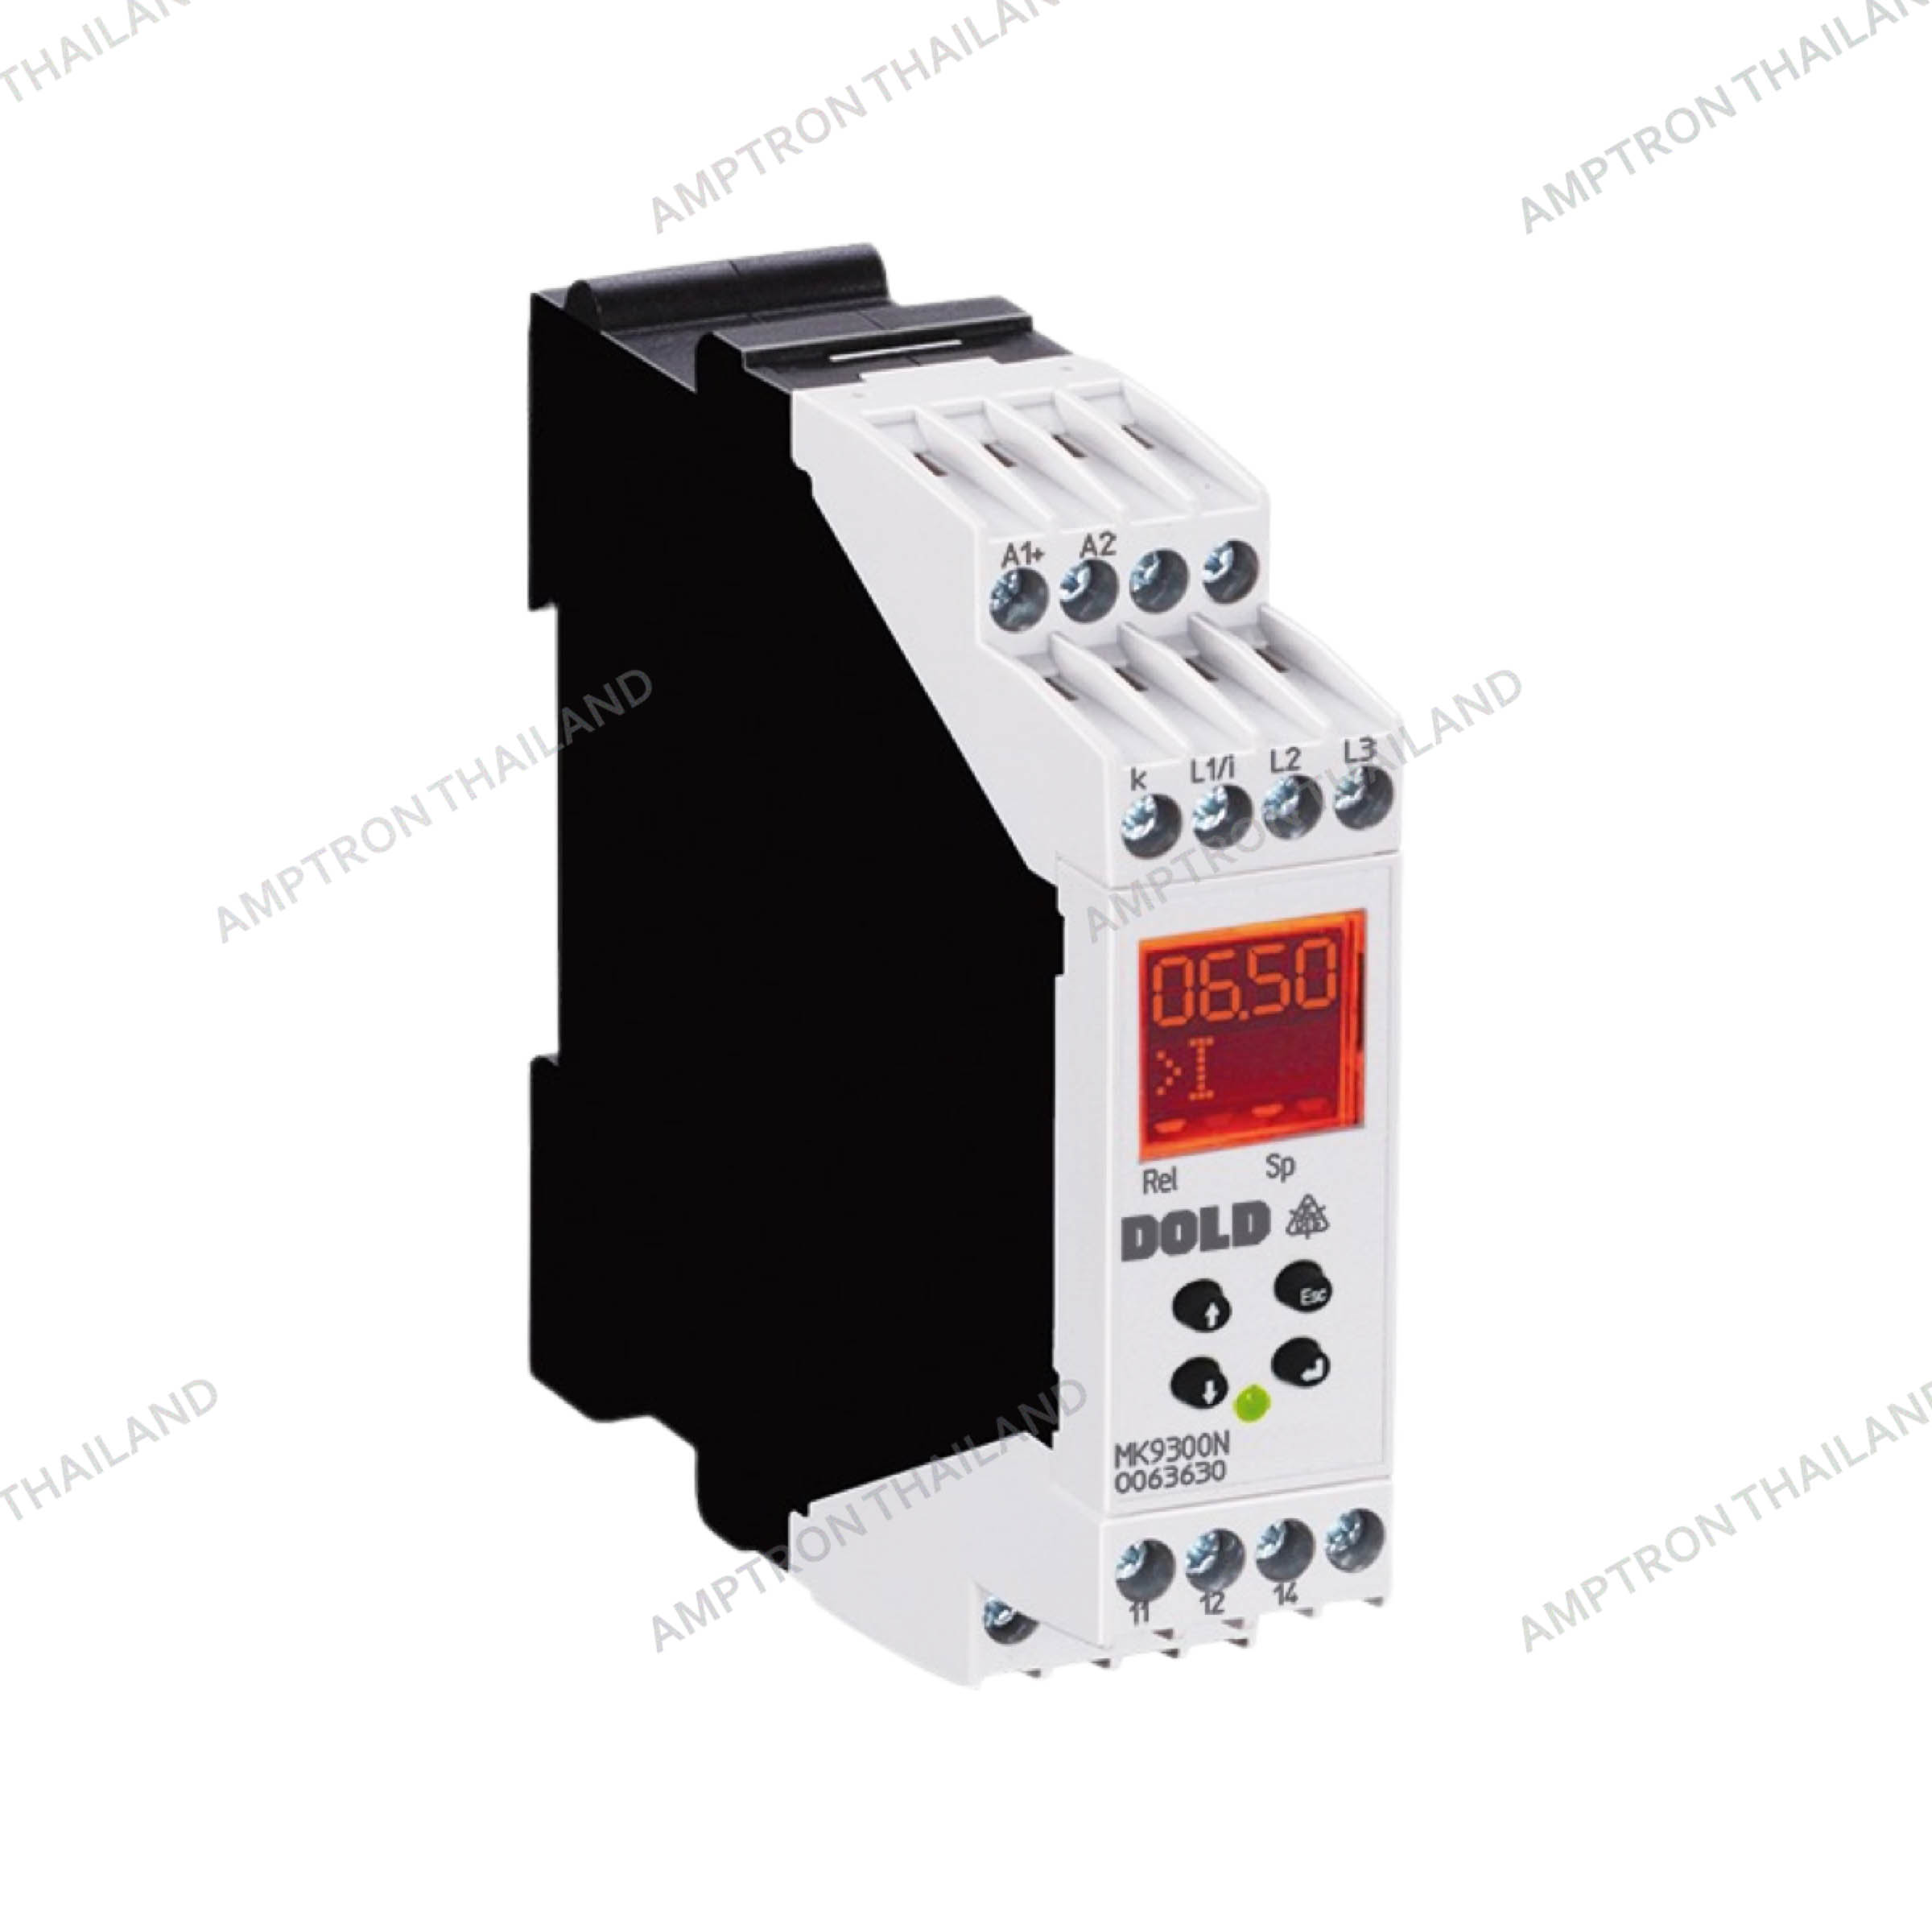 MK 9300N Varimeter PRO Multifunction Measuring Relay